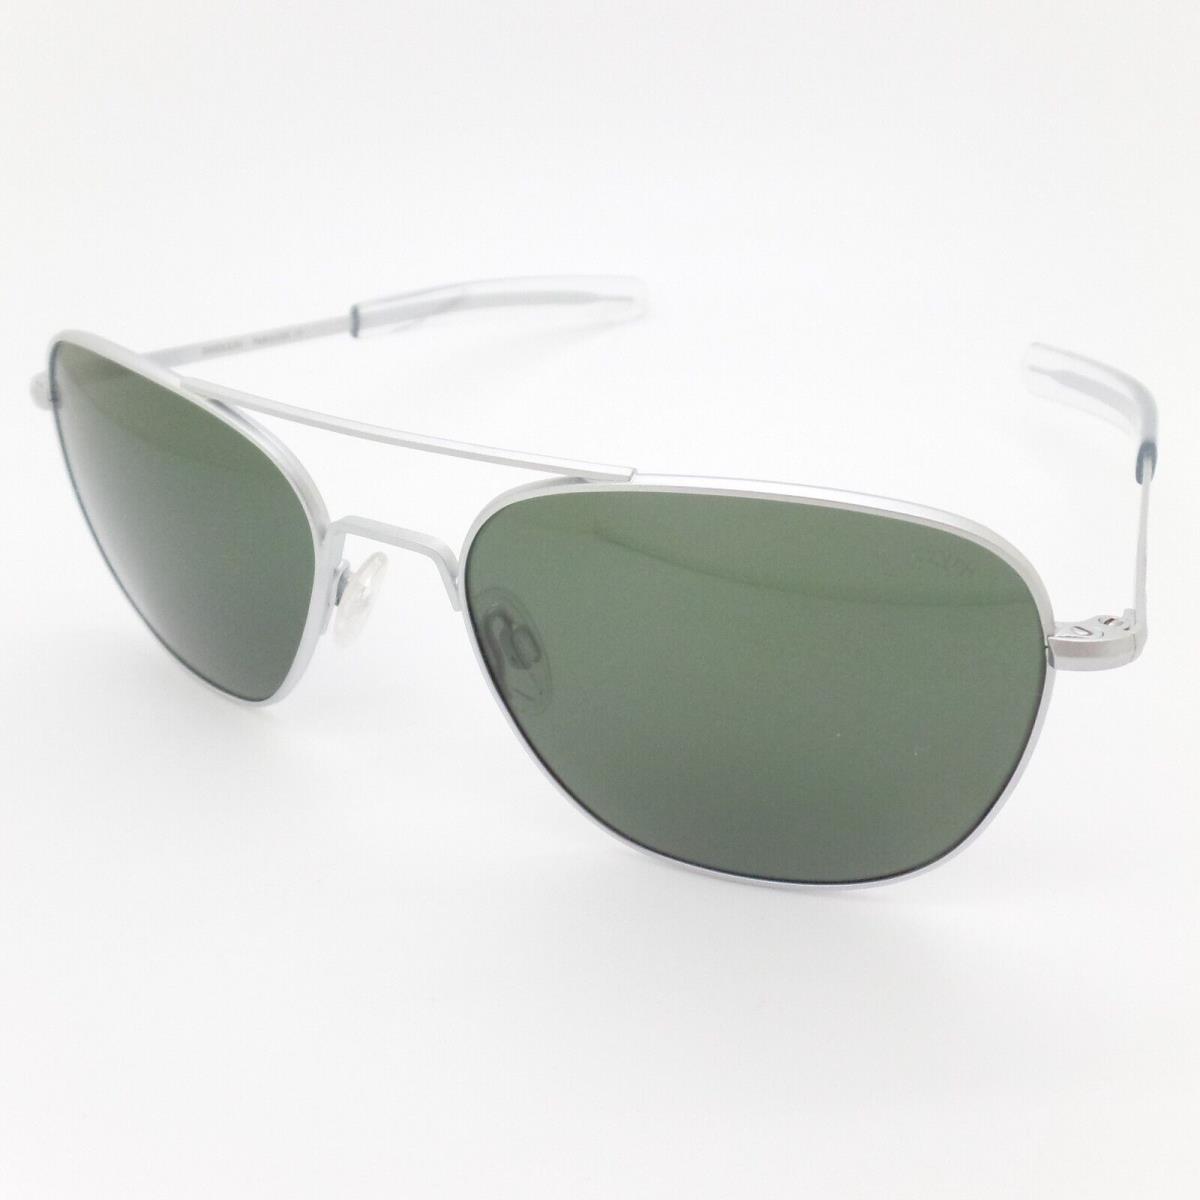 Randolph sunglasses Aviator - Matte Chrome Frame, AGX Green Lens 0